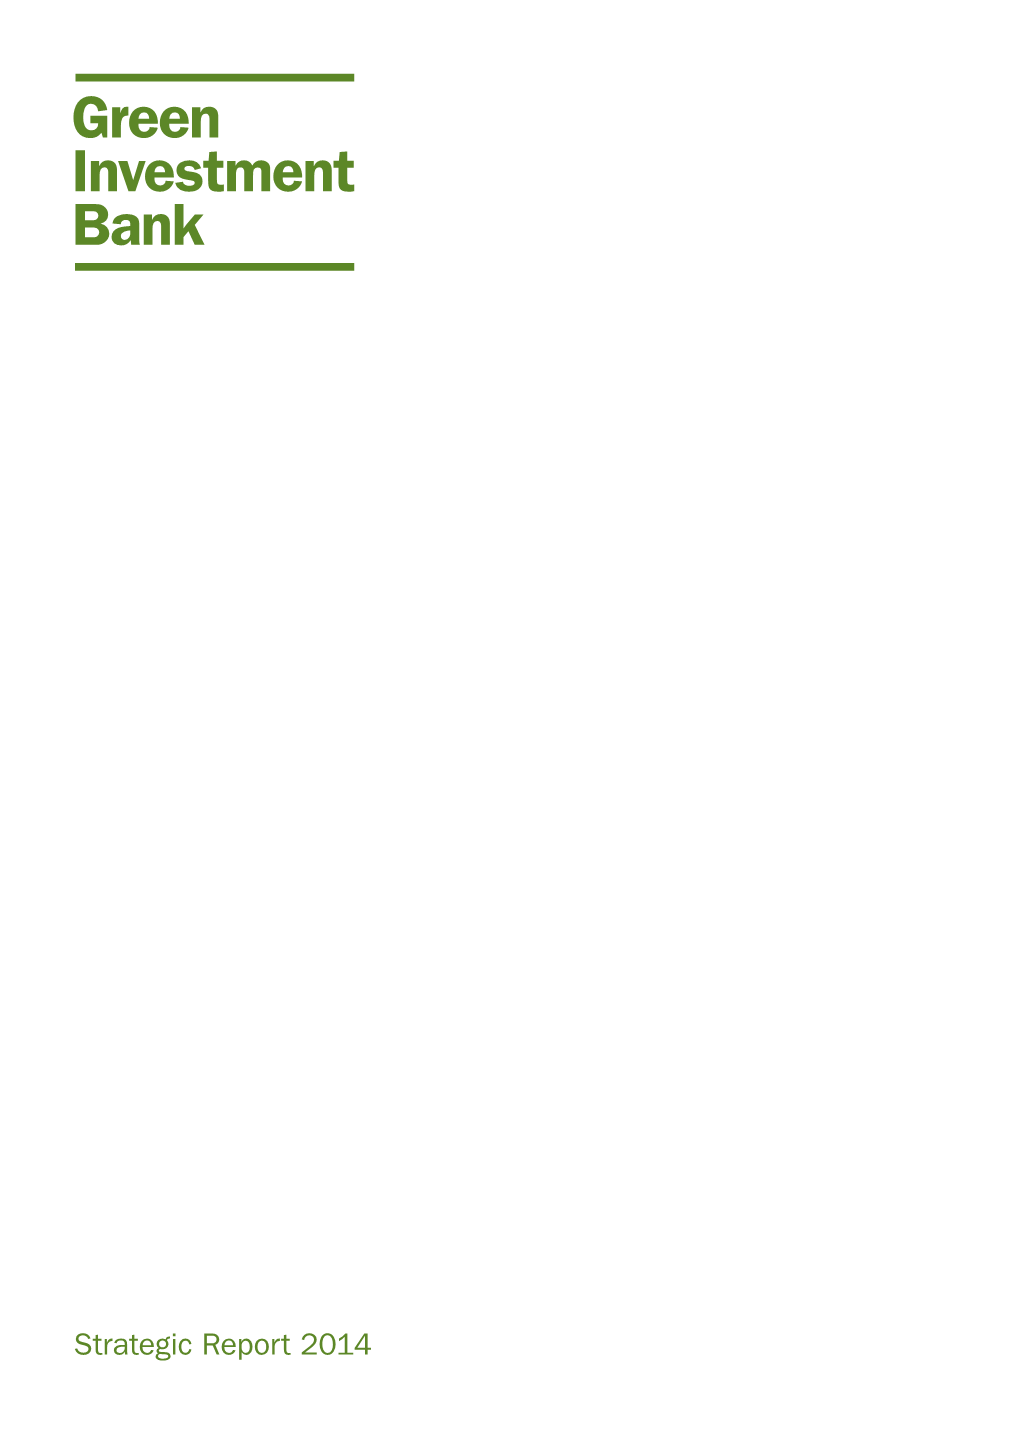 Green Investment Bank Strategic Report